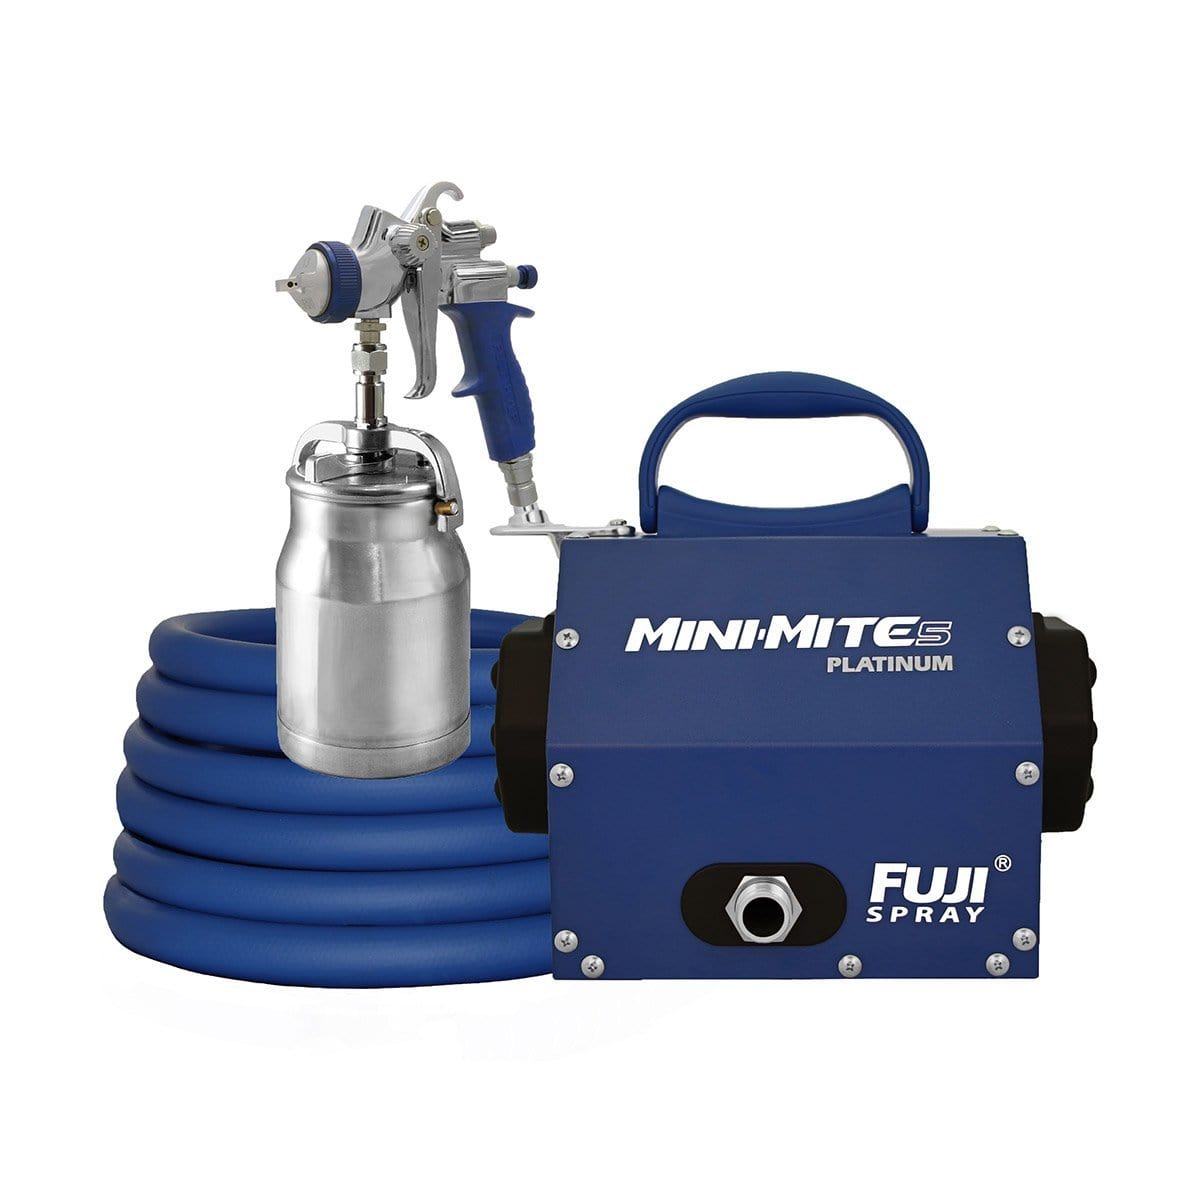 Fuji Spray 2905-T70 HVLP Spray System Mini-Mite 5 Platinum T-Series HVLP System Bottom Feed